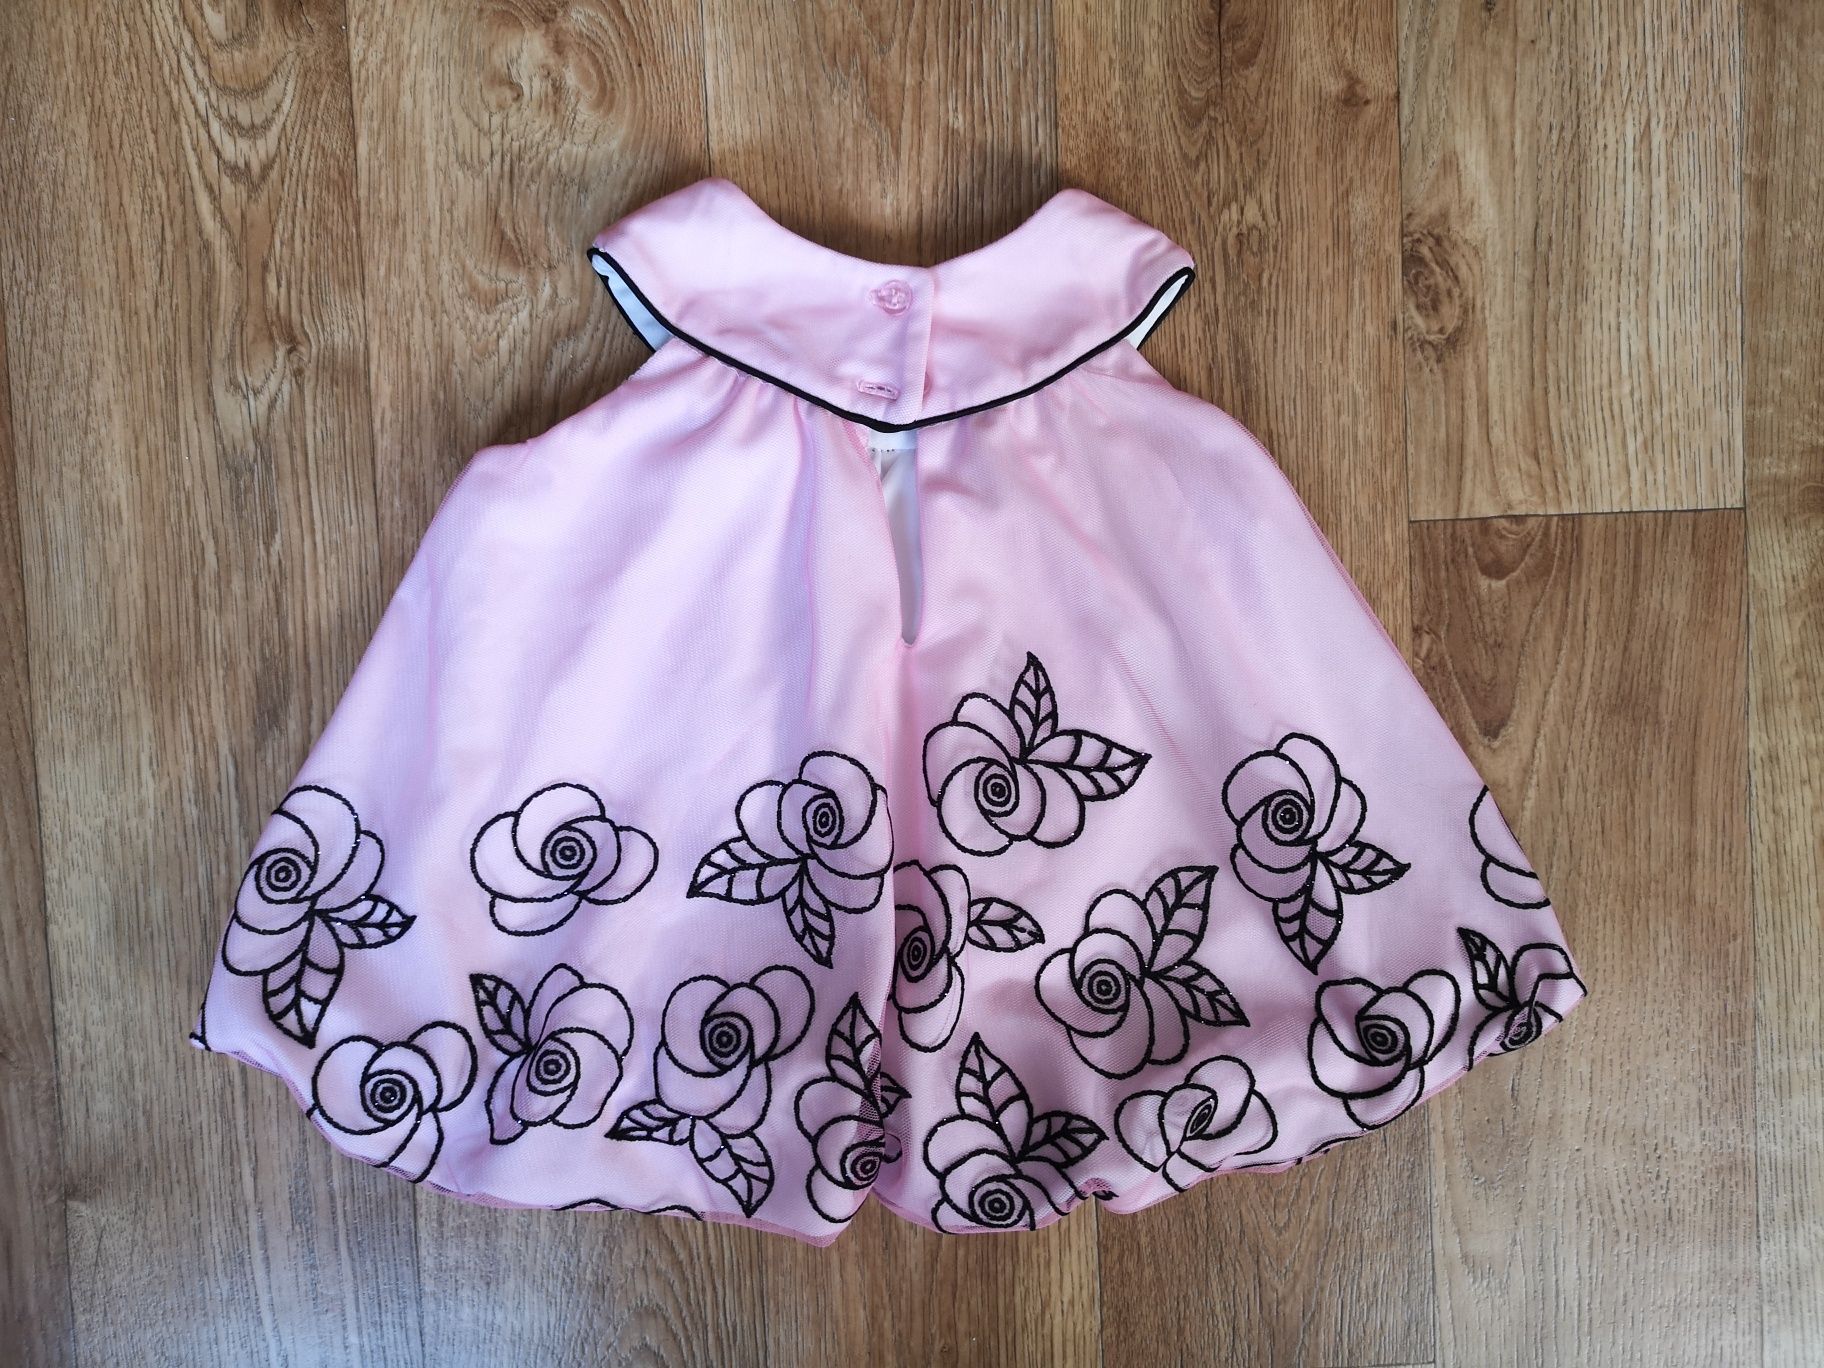 Бебешка рокличка Детска рокля за повод Официална Елегантна розова 6-12